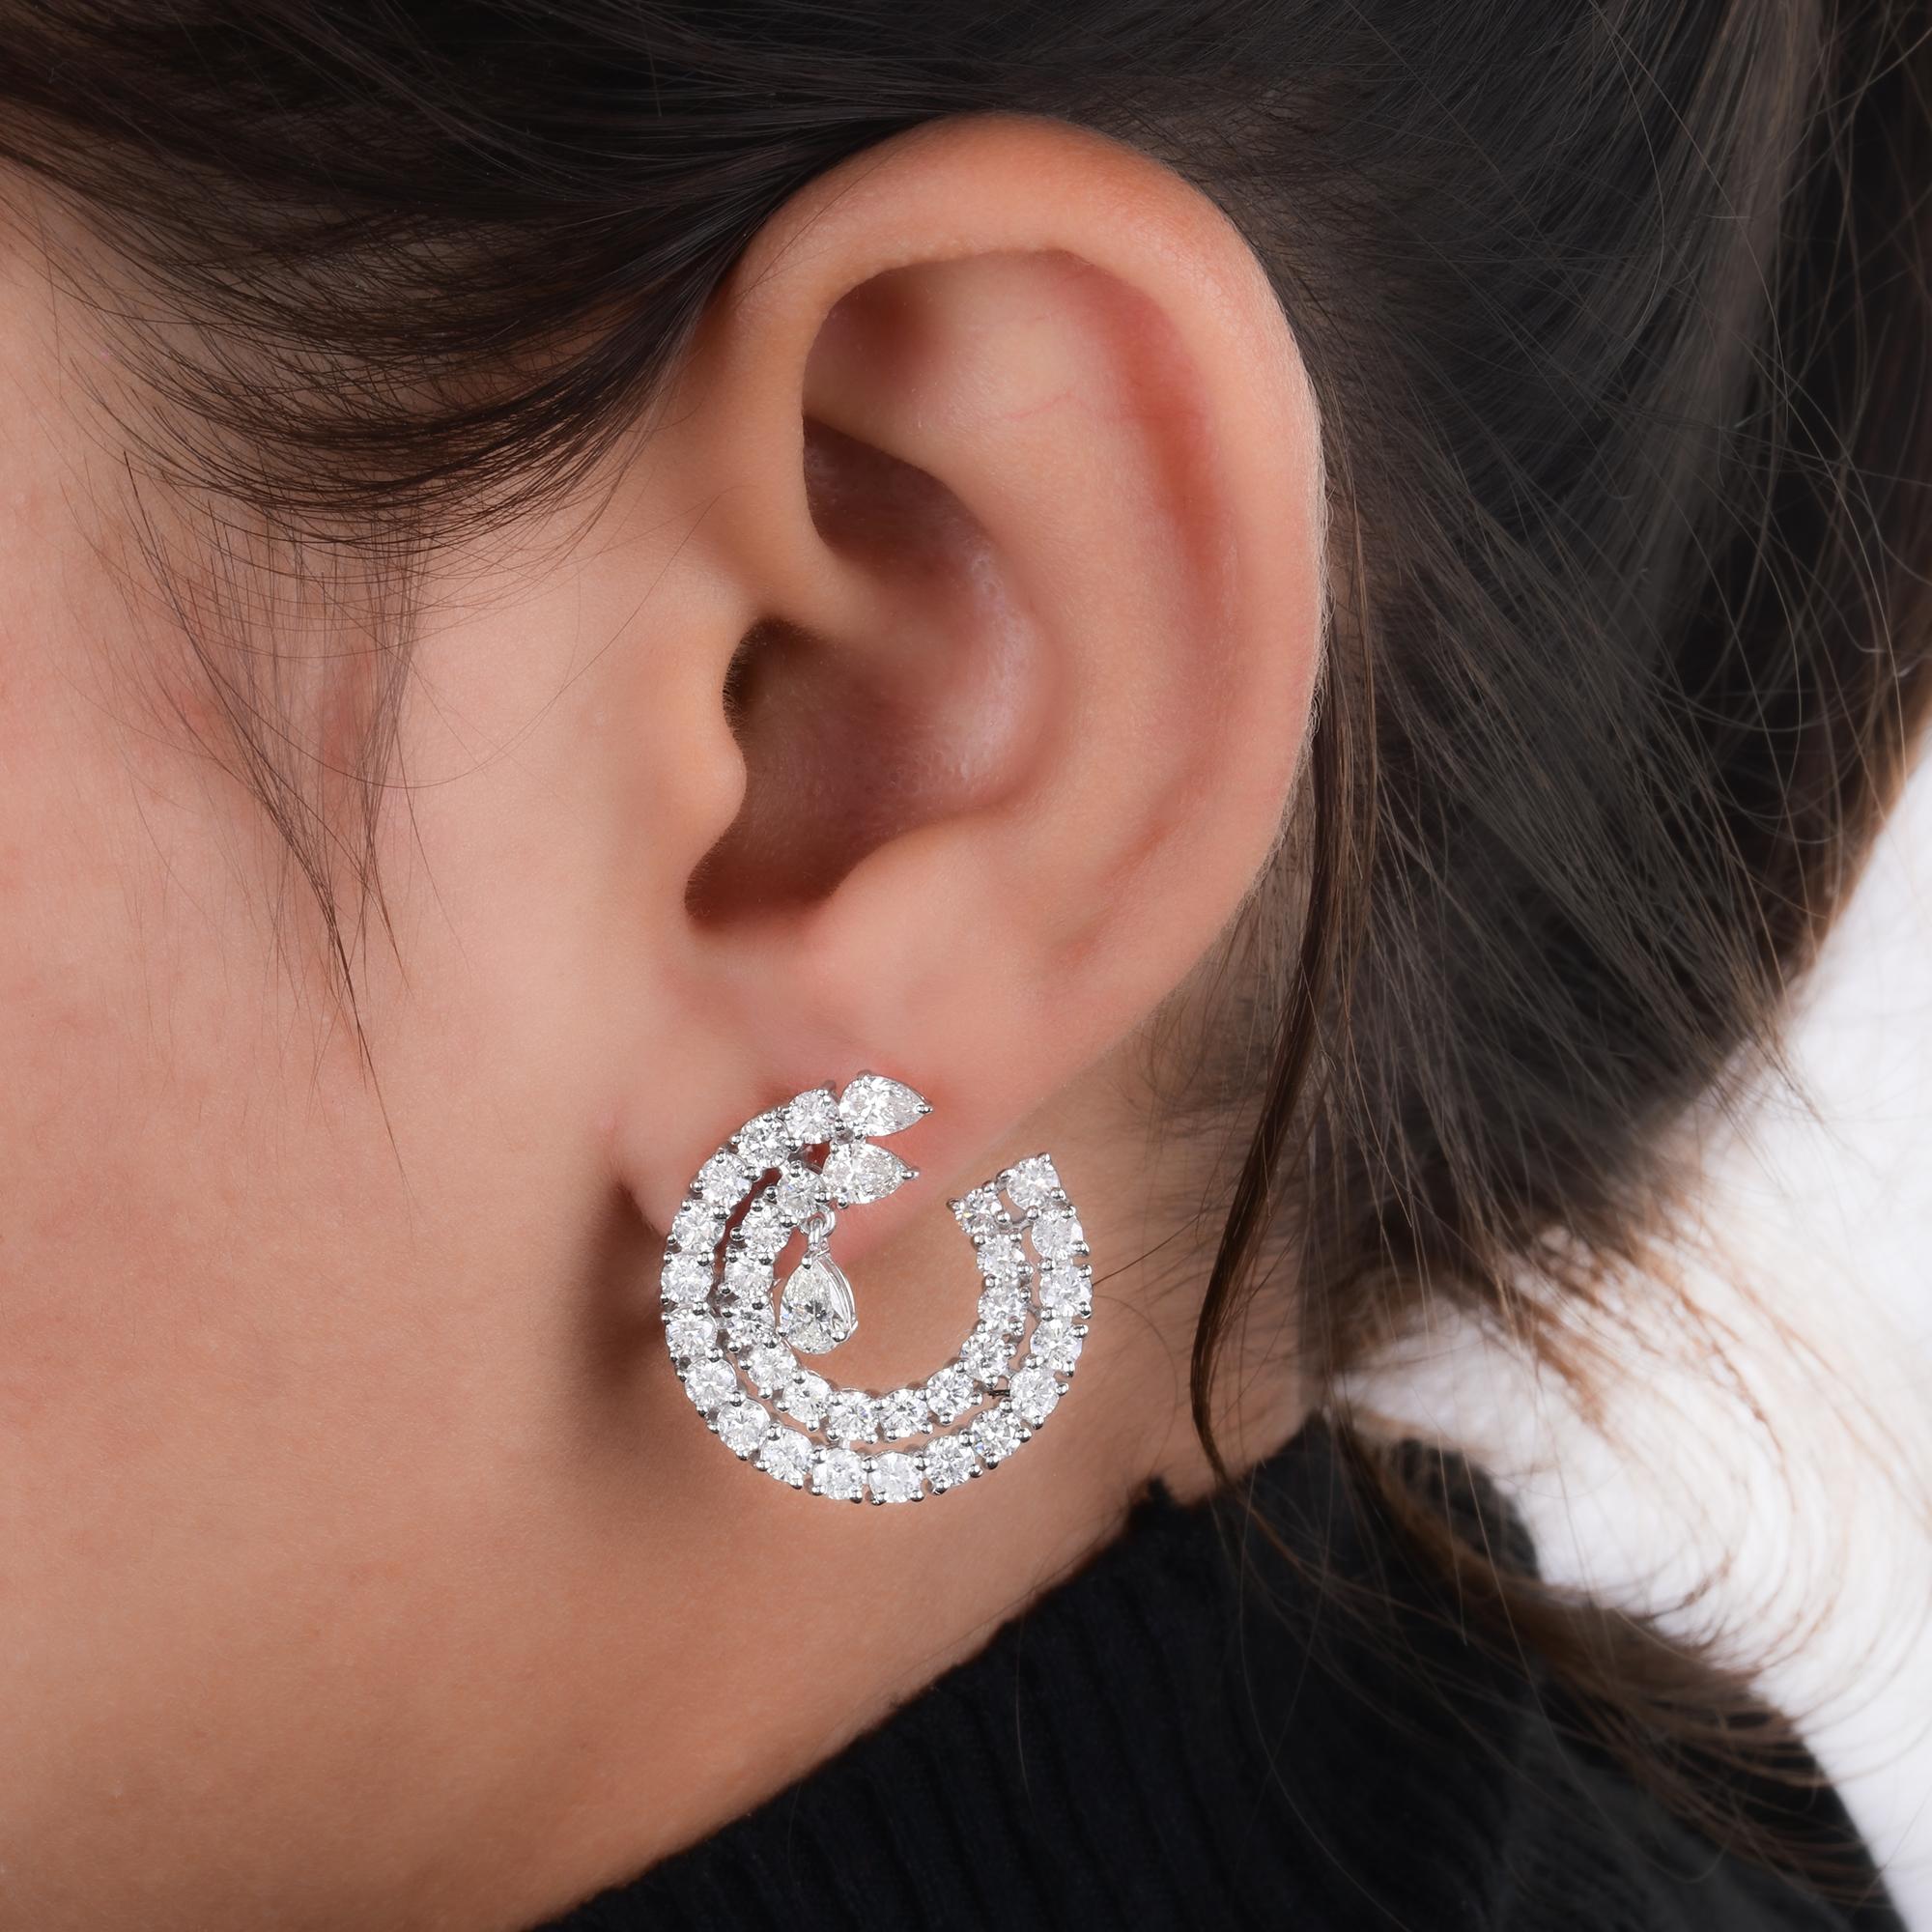 Modern Real 5 Carat Pear & Round Diamond Earrings 14 Karat White Gold Handmade Jewelry For Sale